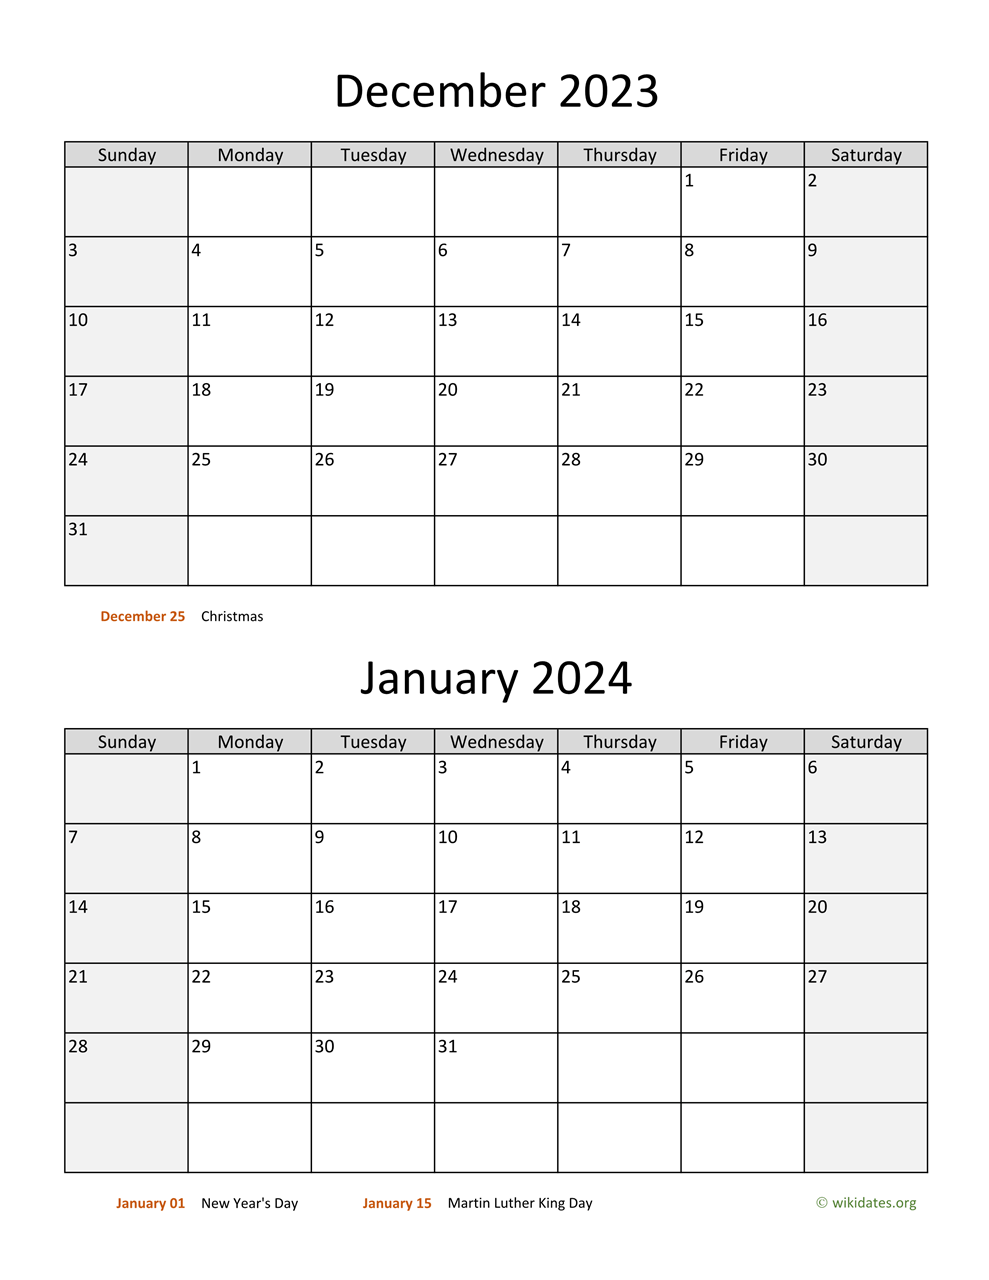 December 2023 and January 2024 Calendar WikiDates org